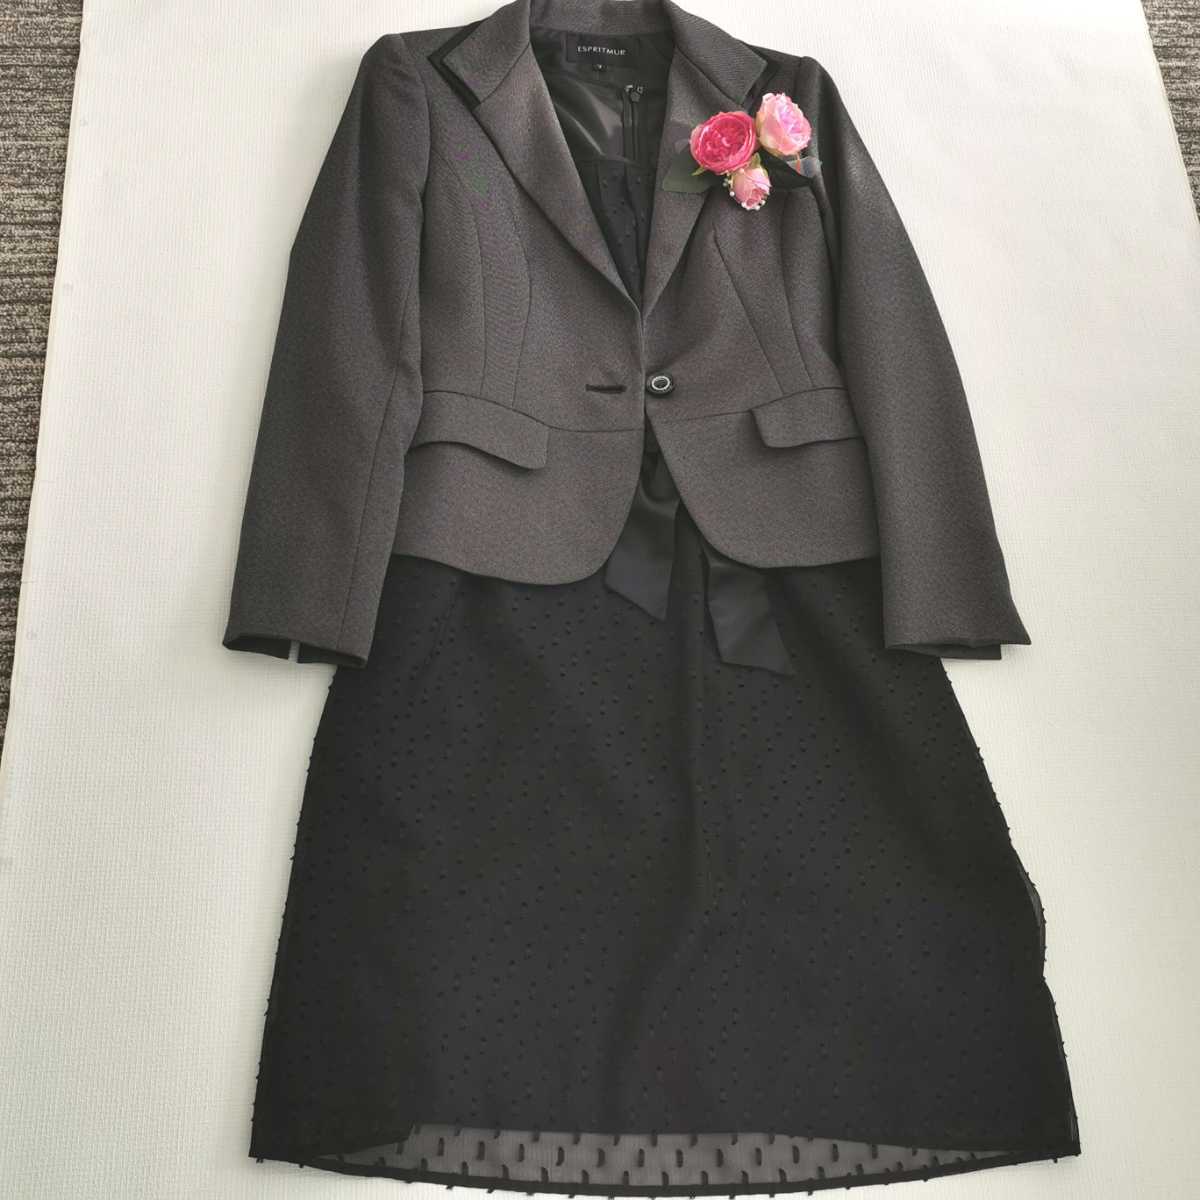  esprit шлепанцы костюм юбка One-piece комплект из трех позиций размер 7